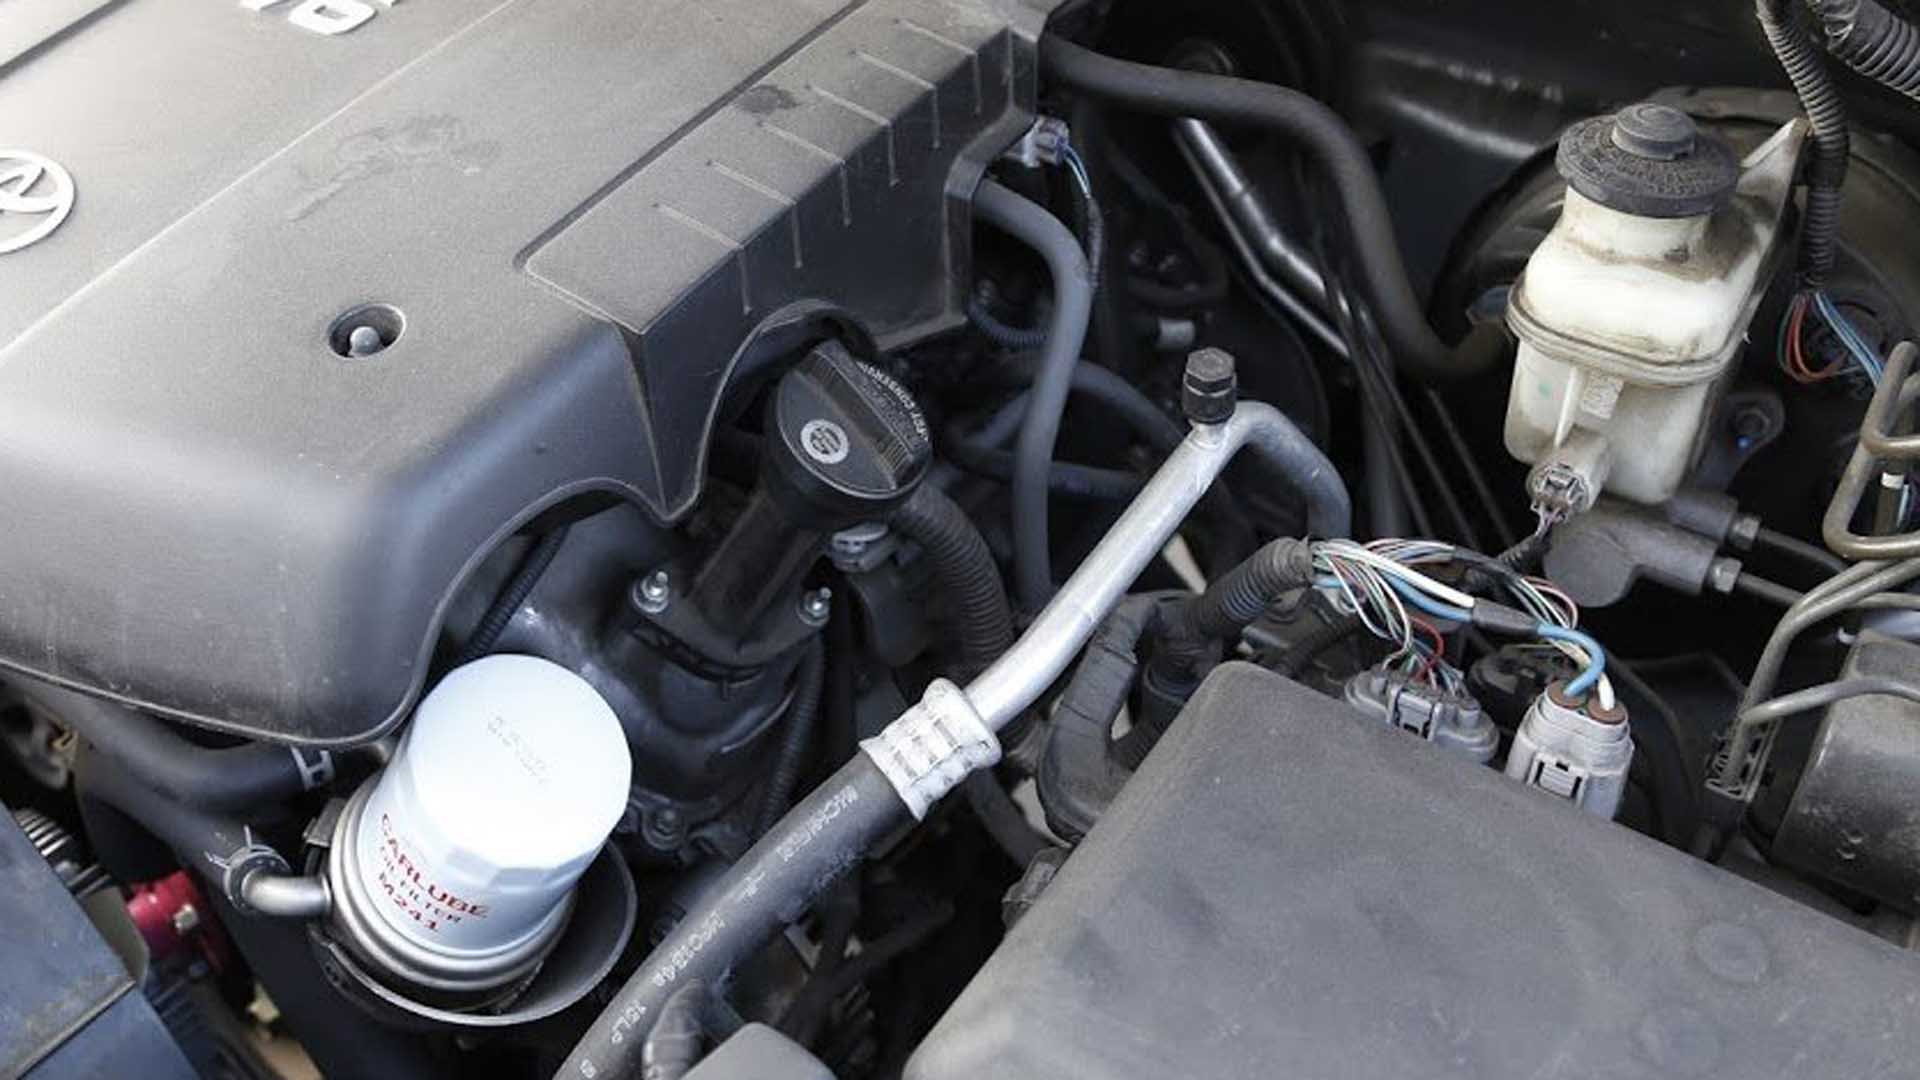 Toyota Tundra: How to Change Engine Oil | Yotatech